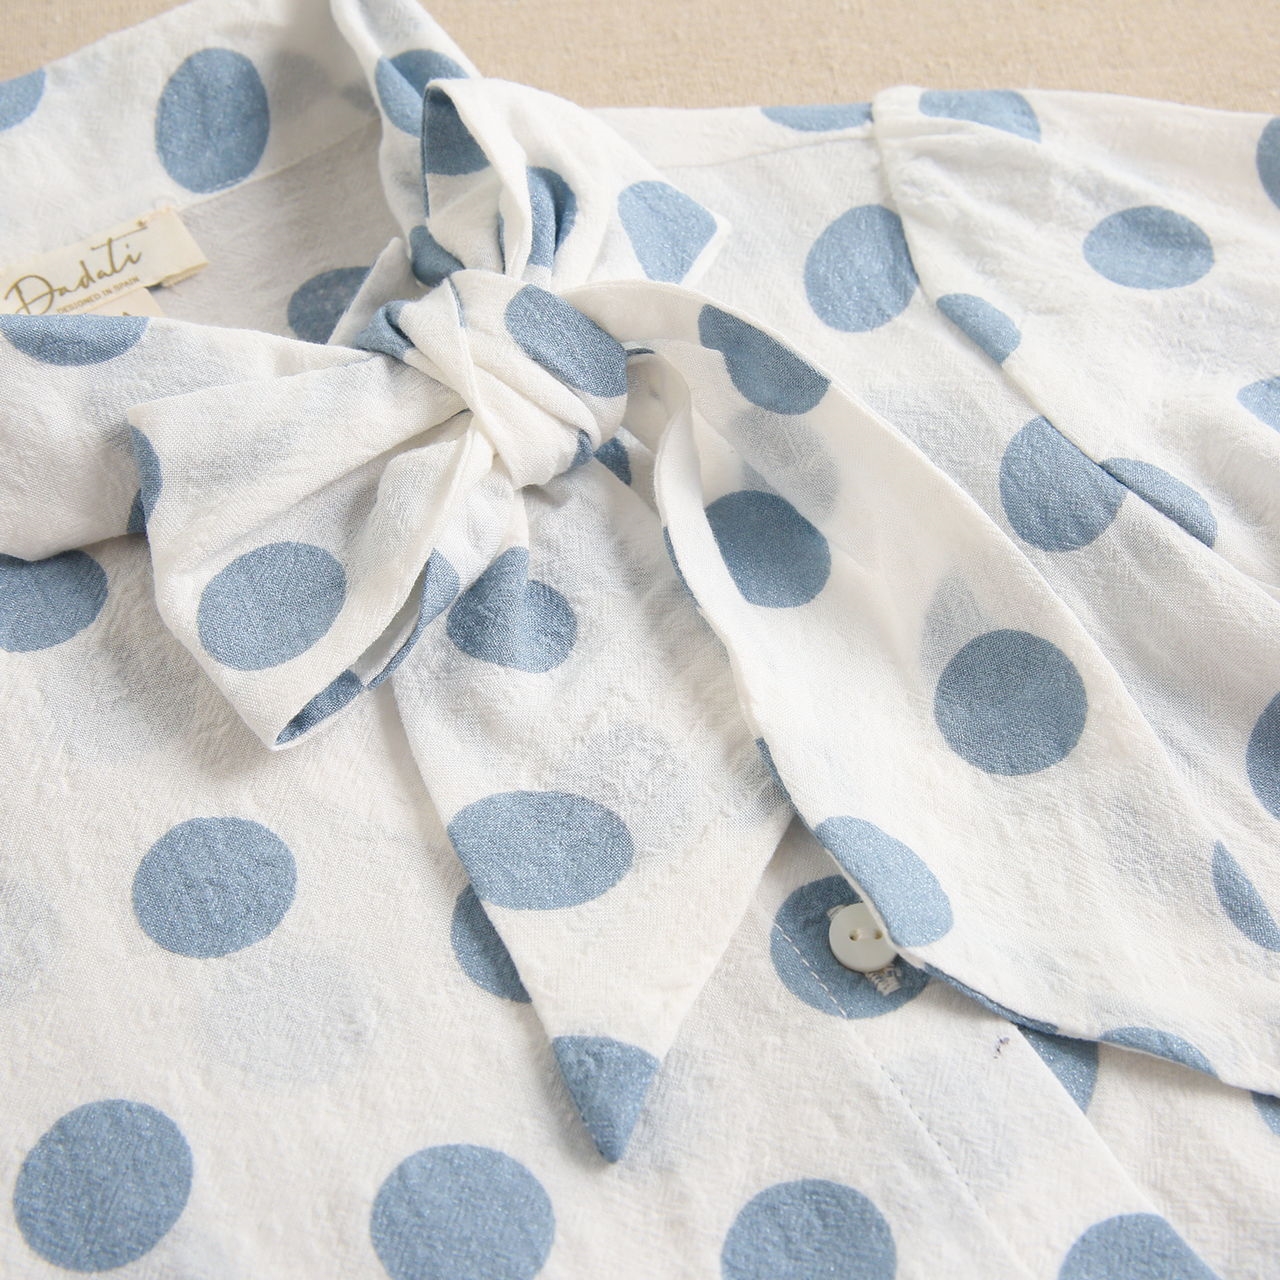 Imagen de Blusa de niña de estampado de lunares azules con lazo